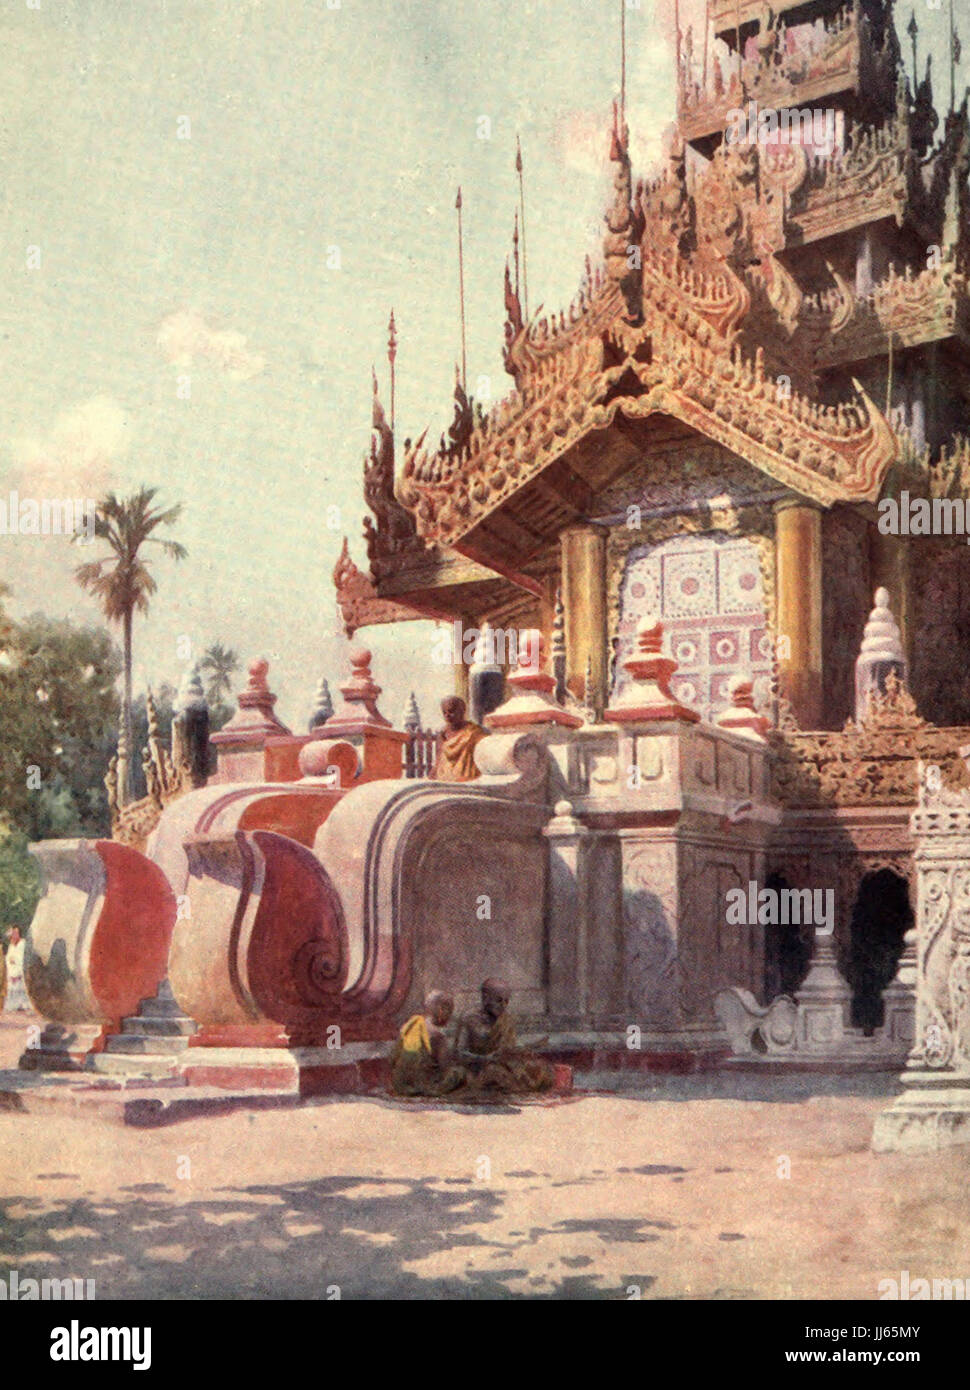 La regina del monastero d'oro, Mandalay Birmania, circa 1908 Foto Stock